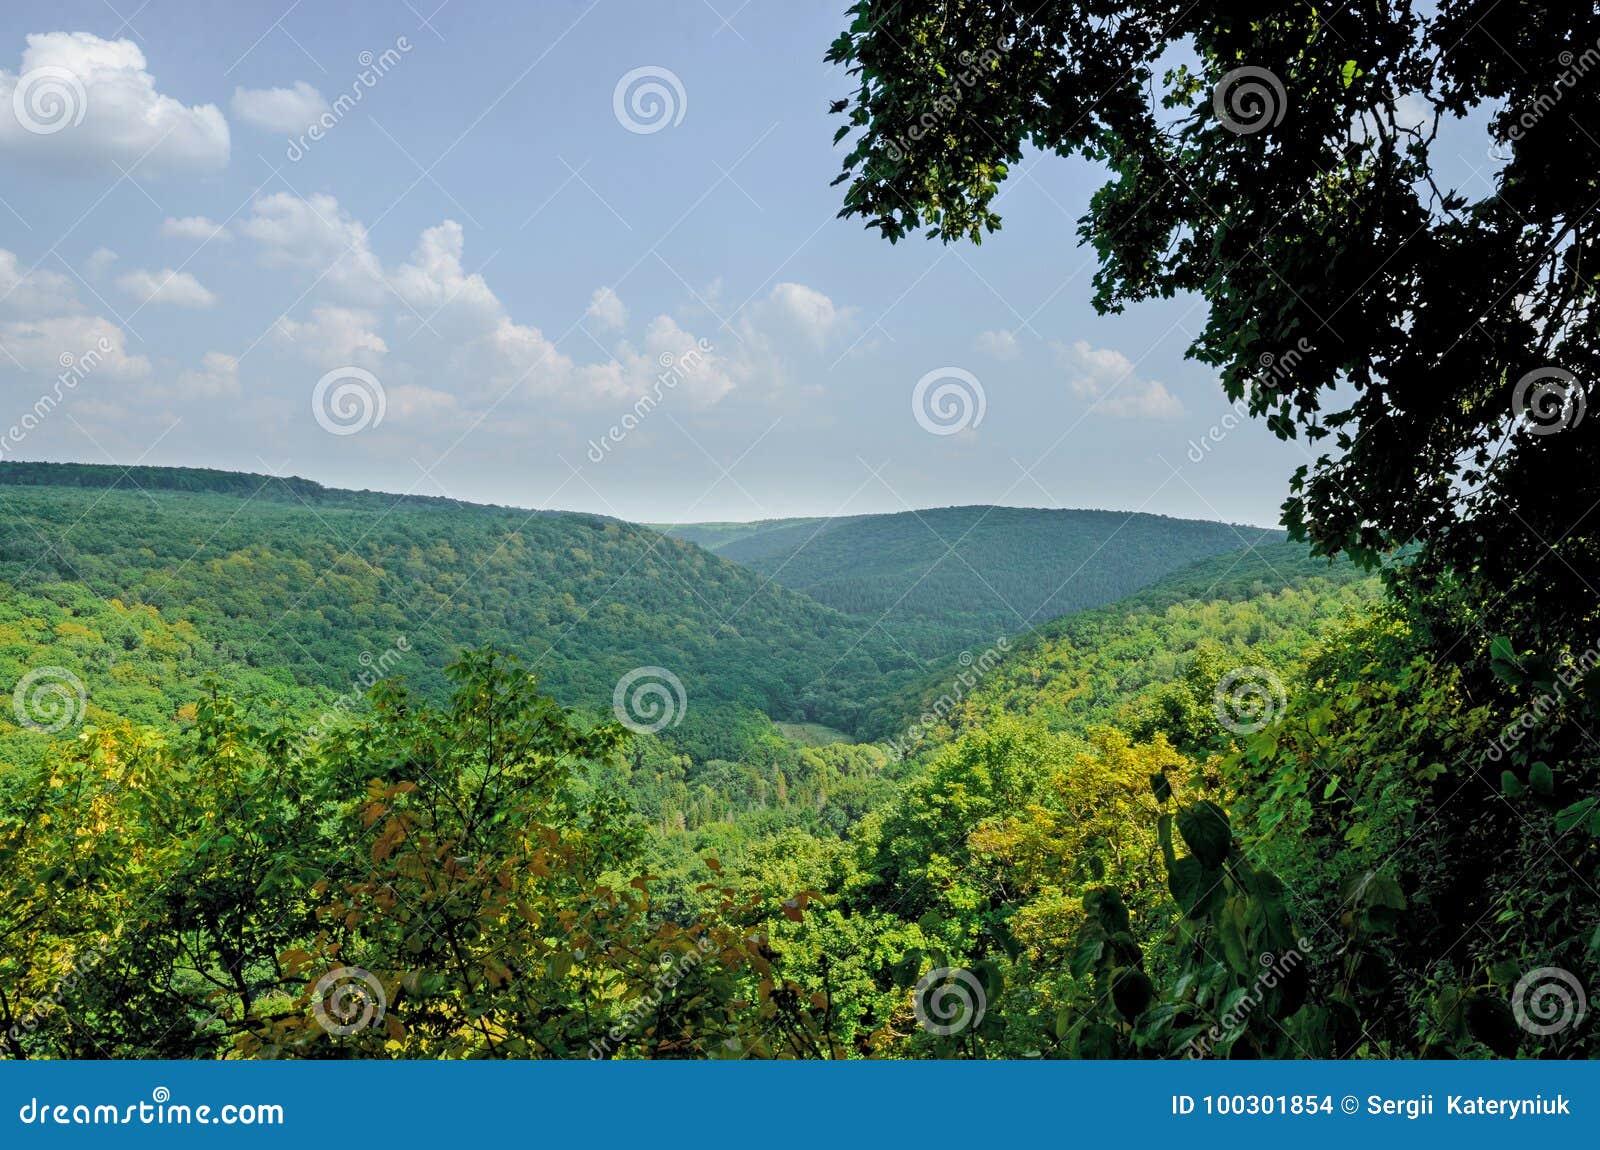 mountain landscape, wonderful forest on mount germinating